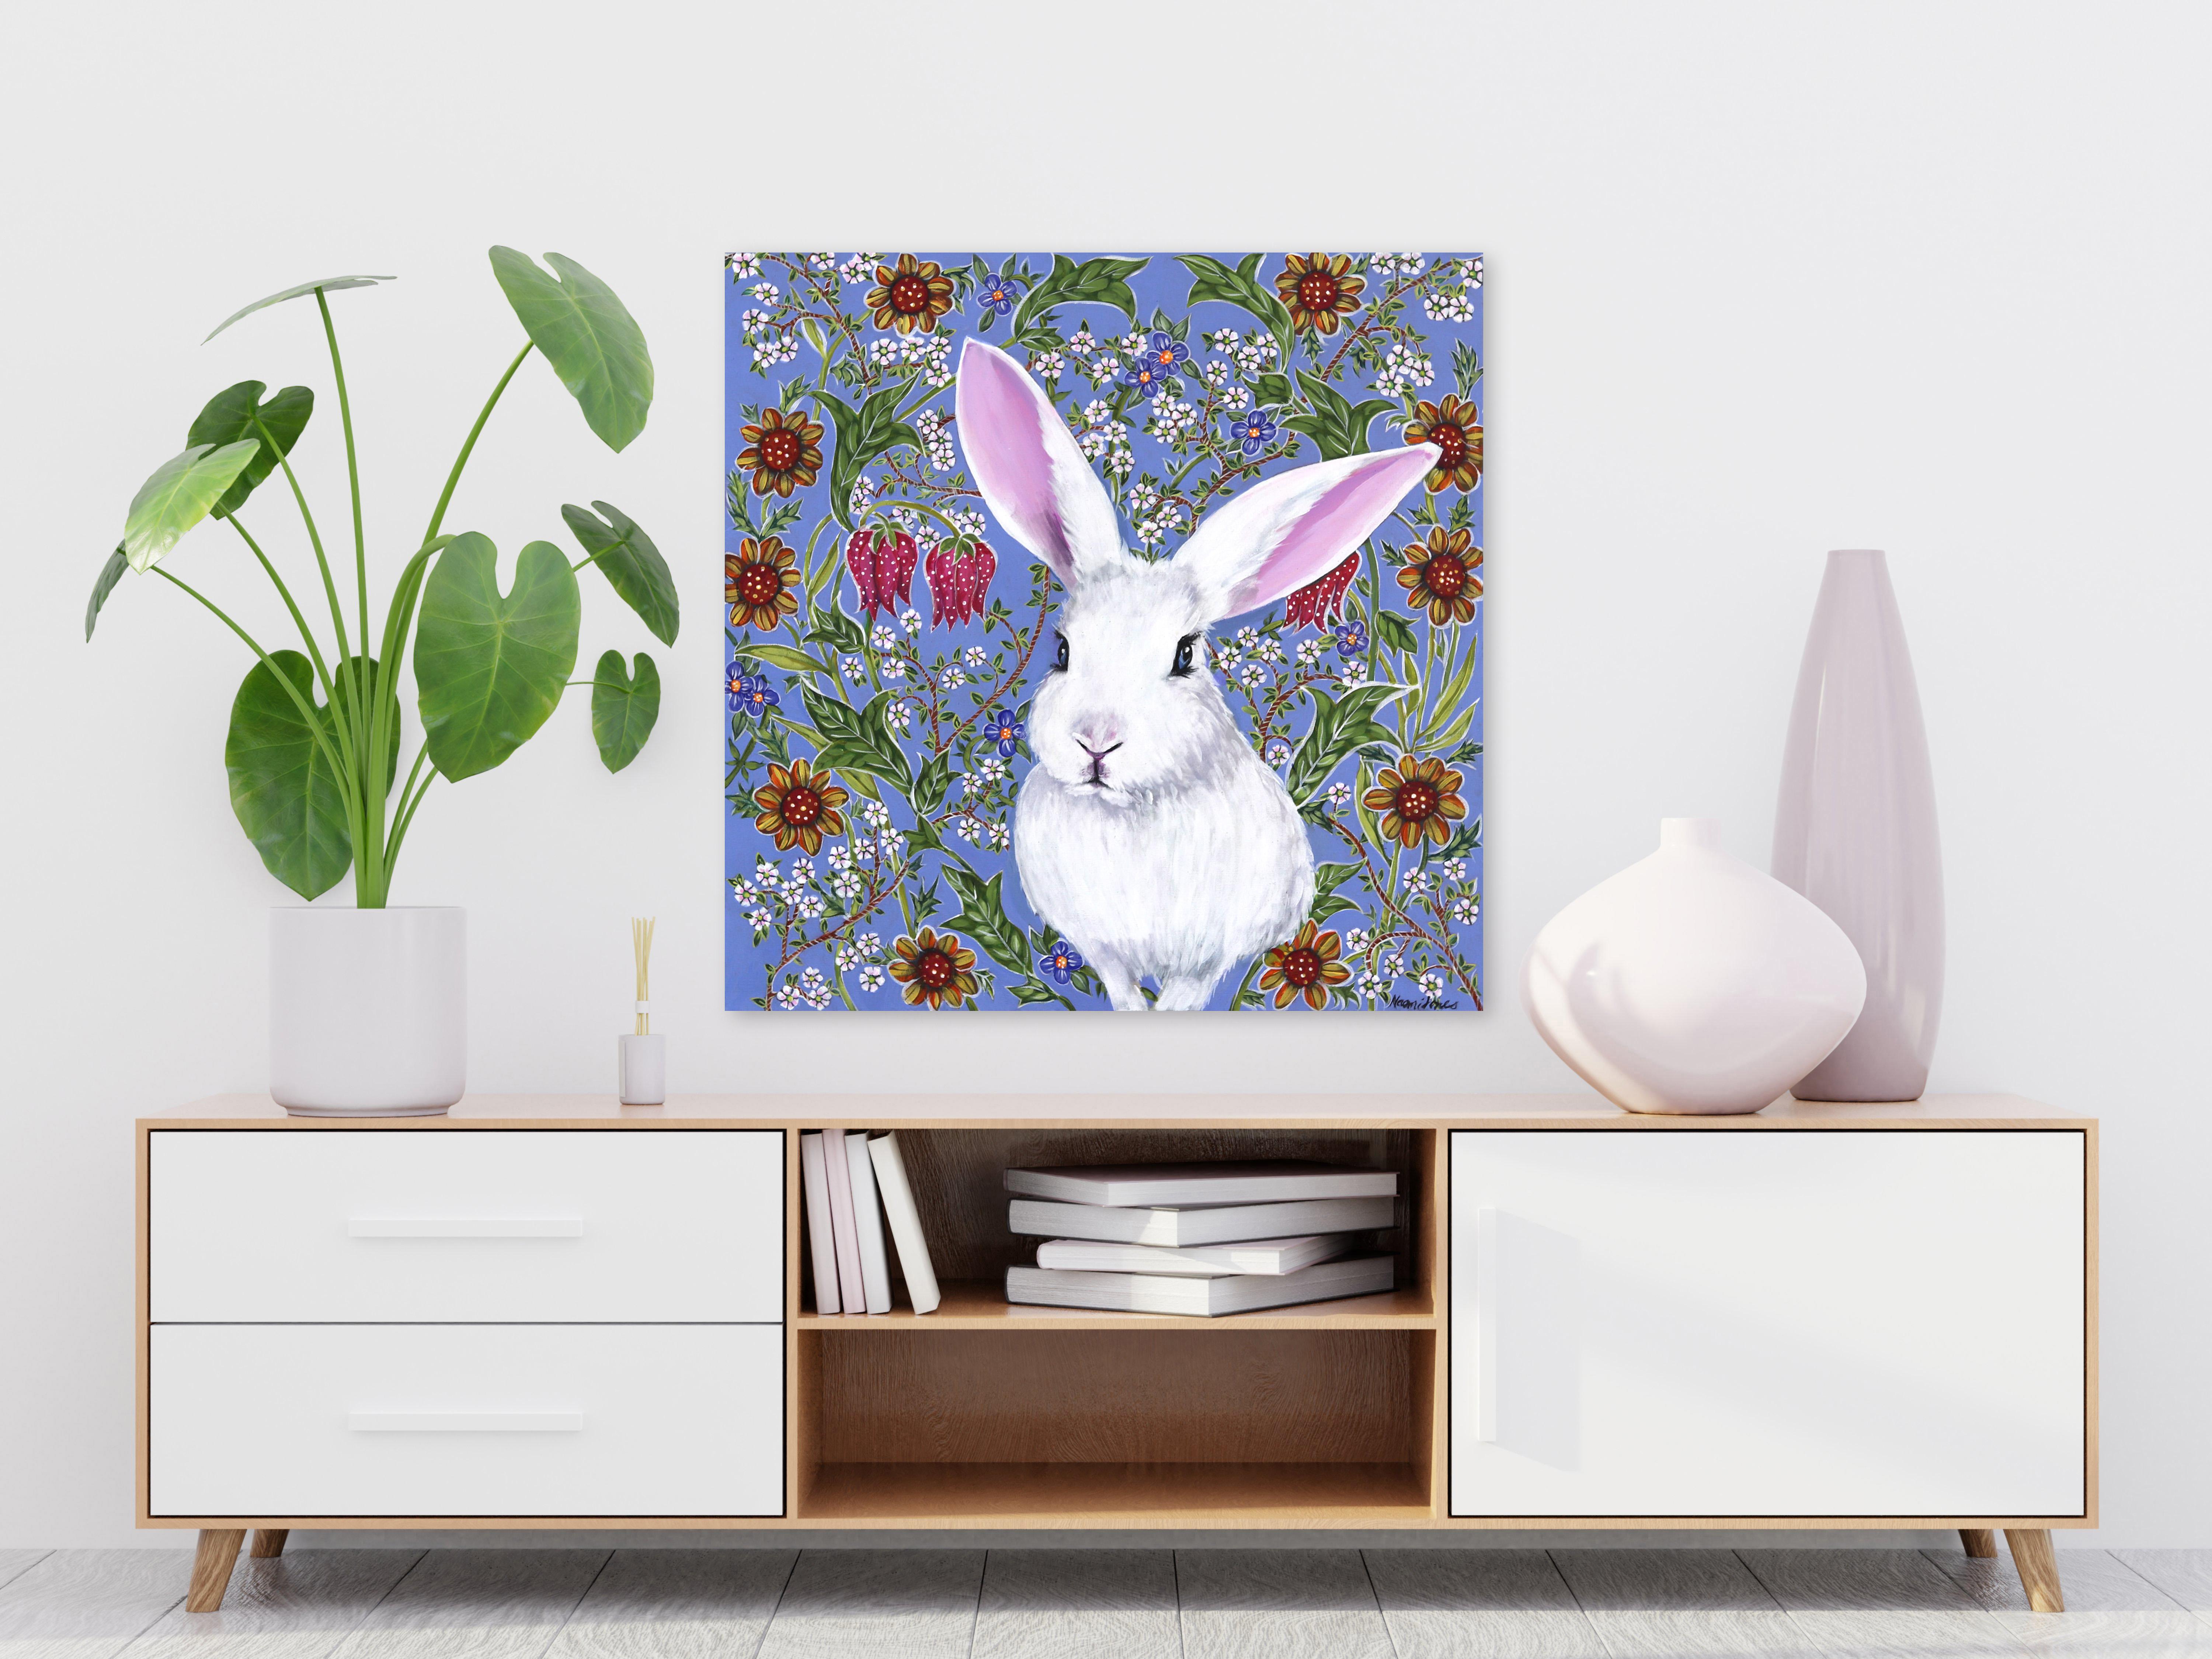 Sweet White Rabbit  - Original Vivid Figurative Animal Painting on Canvas 5